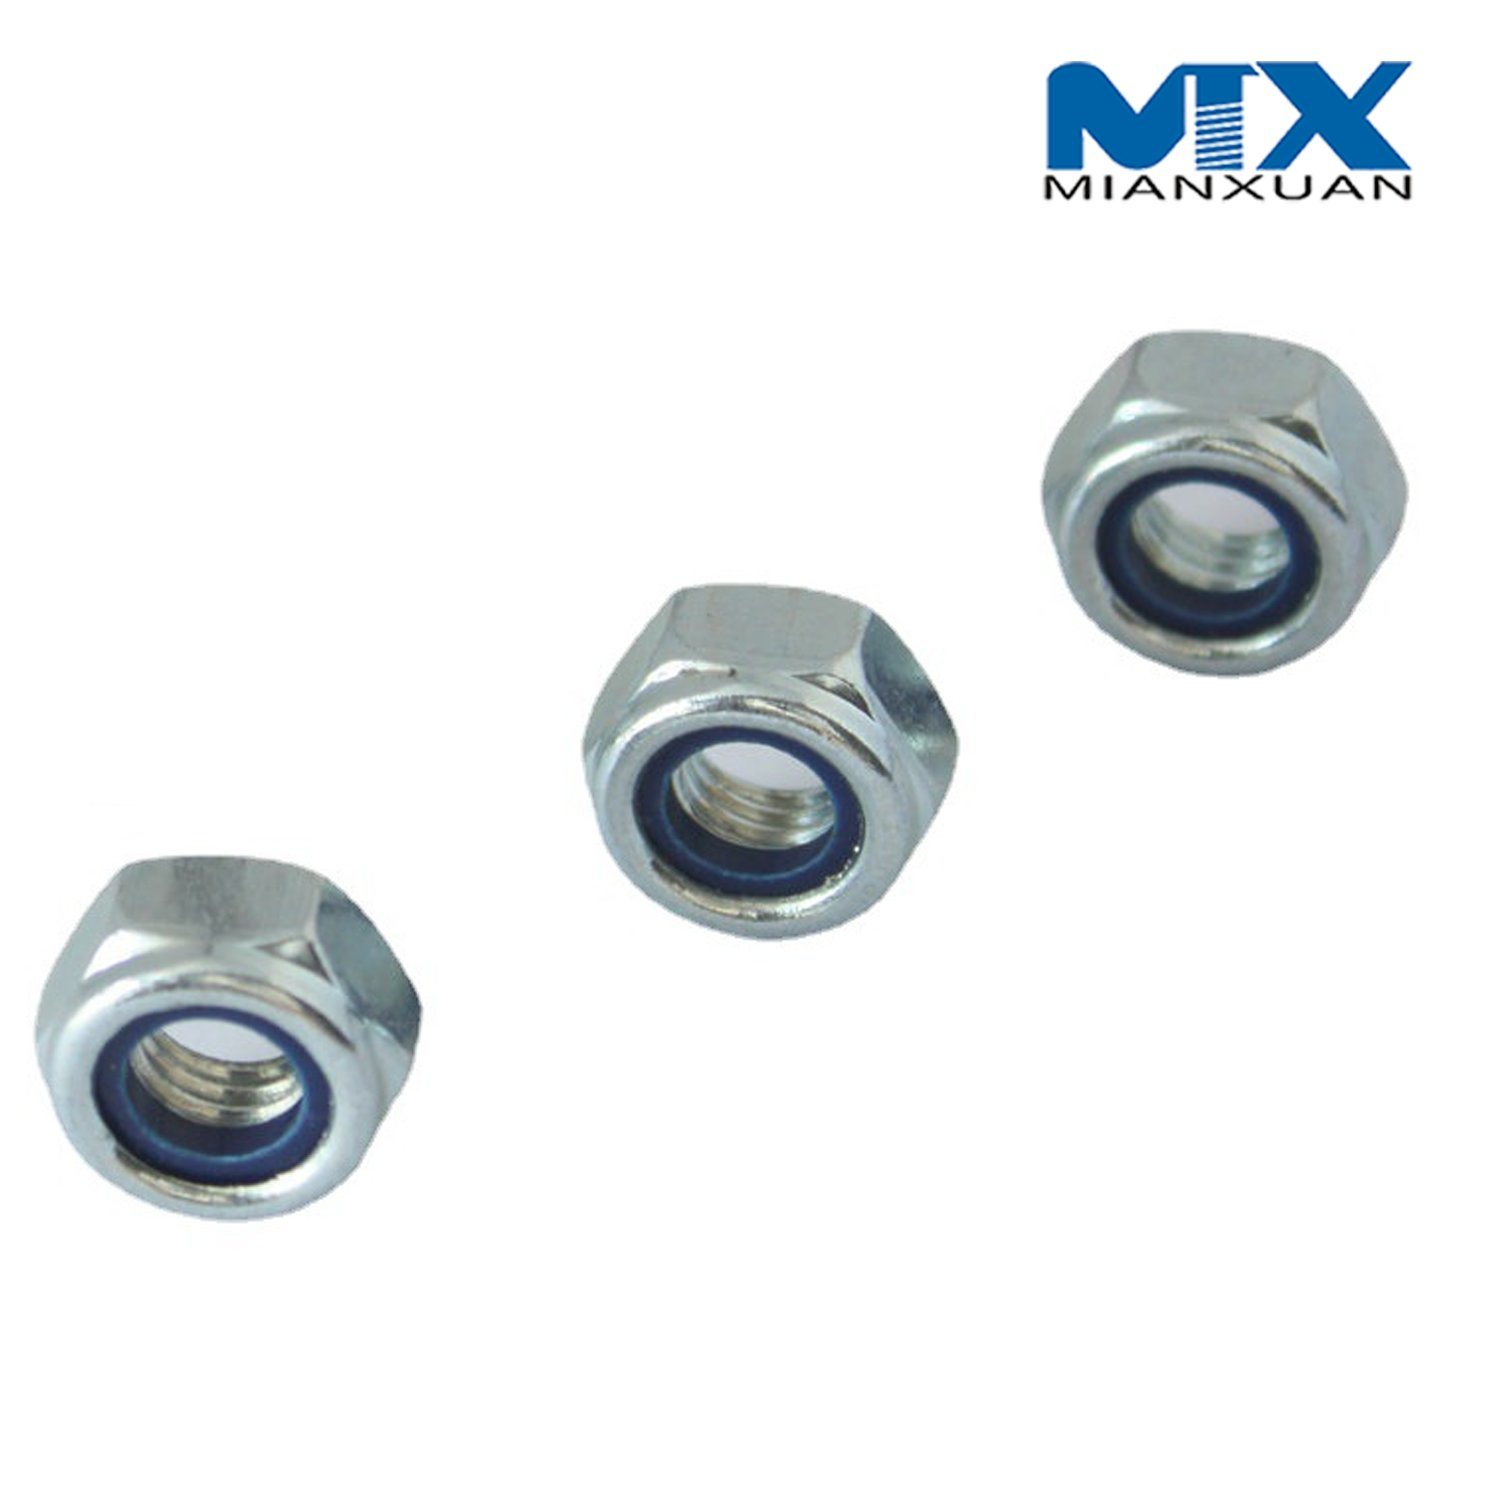 ISO7040 Nylon Lock Nut Carbon Steel Standard